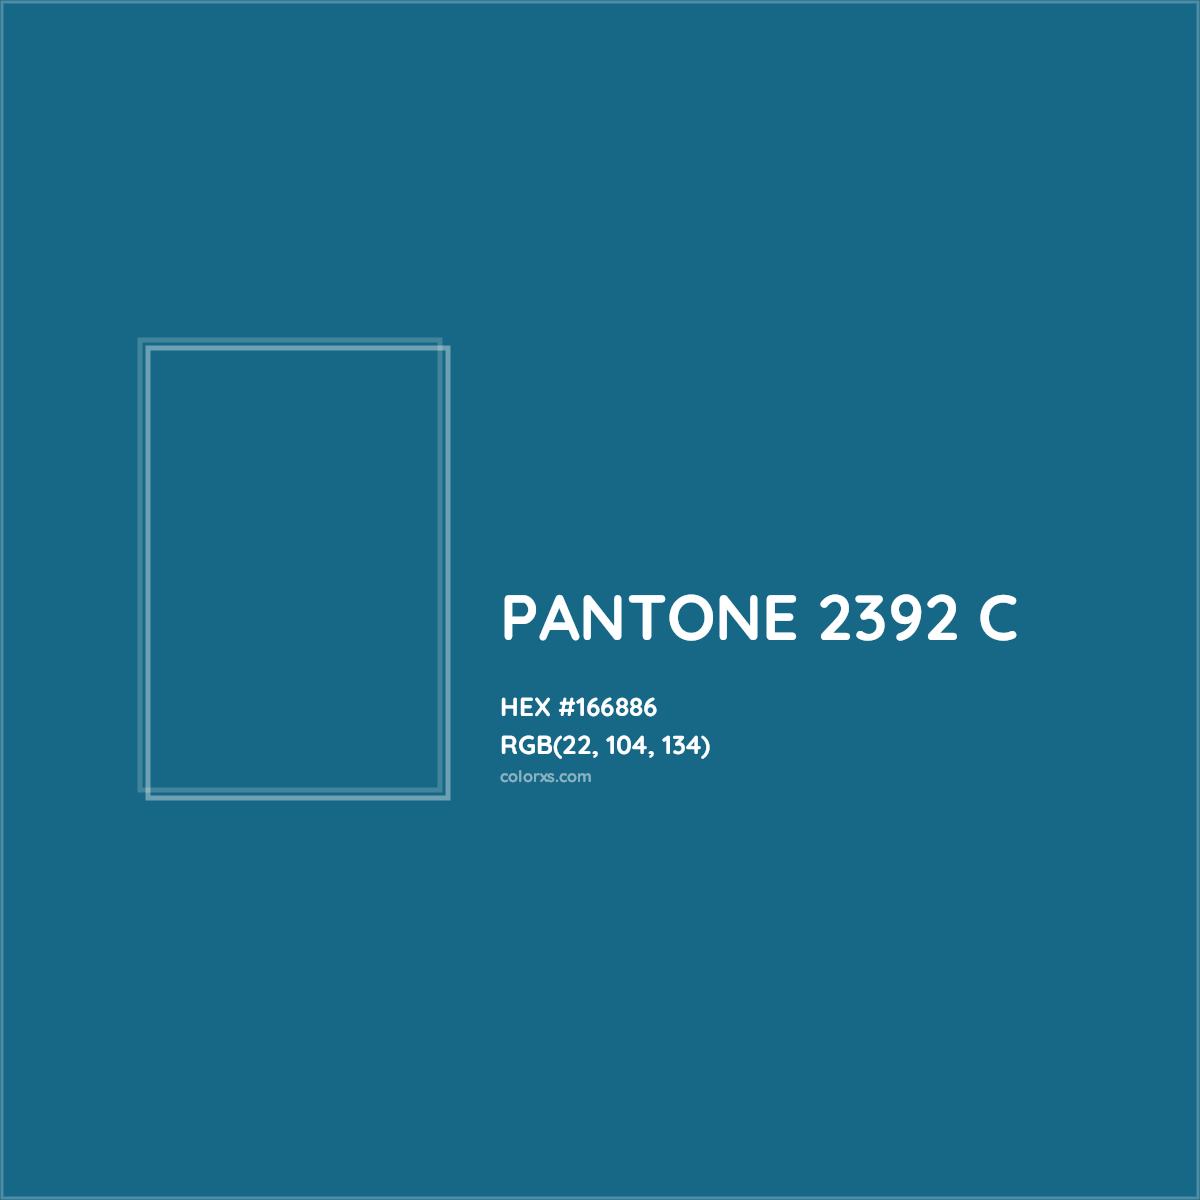 HEX #166886 PANTONE 2392 C CMS Pantone PMS - Color Code